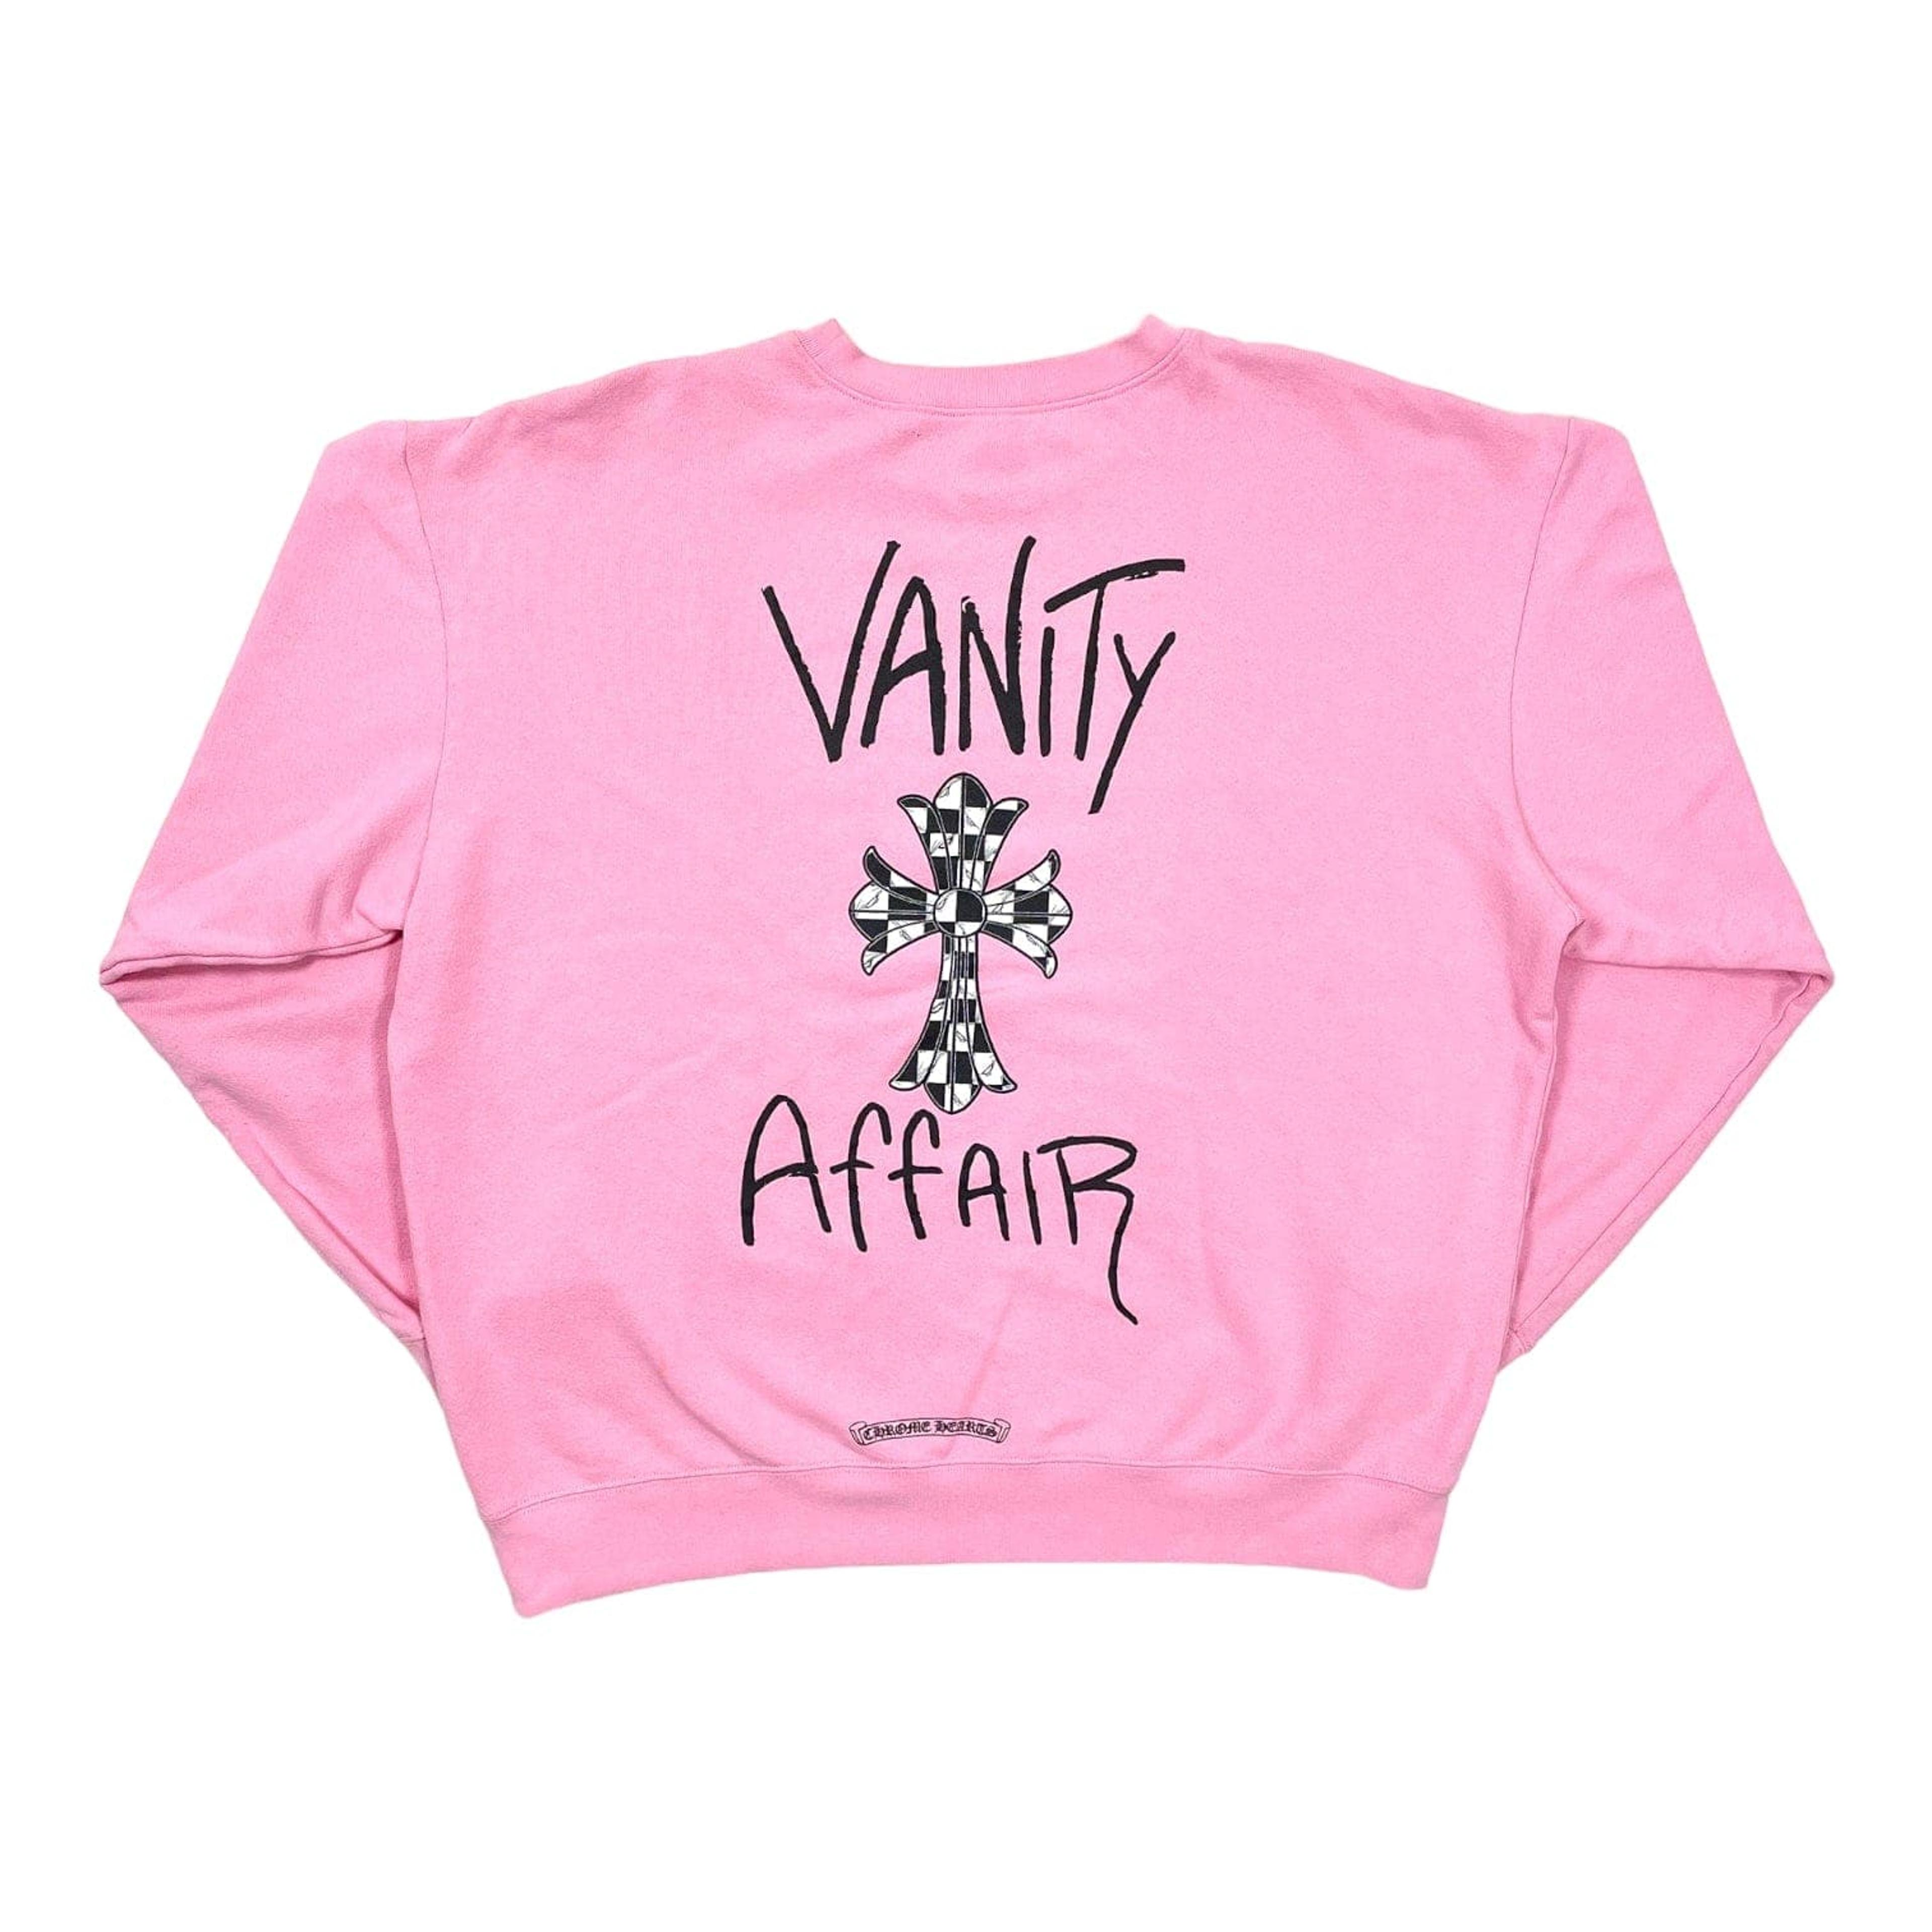 Chrome Hearts Matty Boy Vanity Affair Crewneck Sweatshirt Pink P